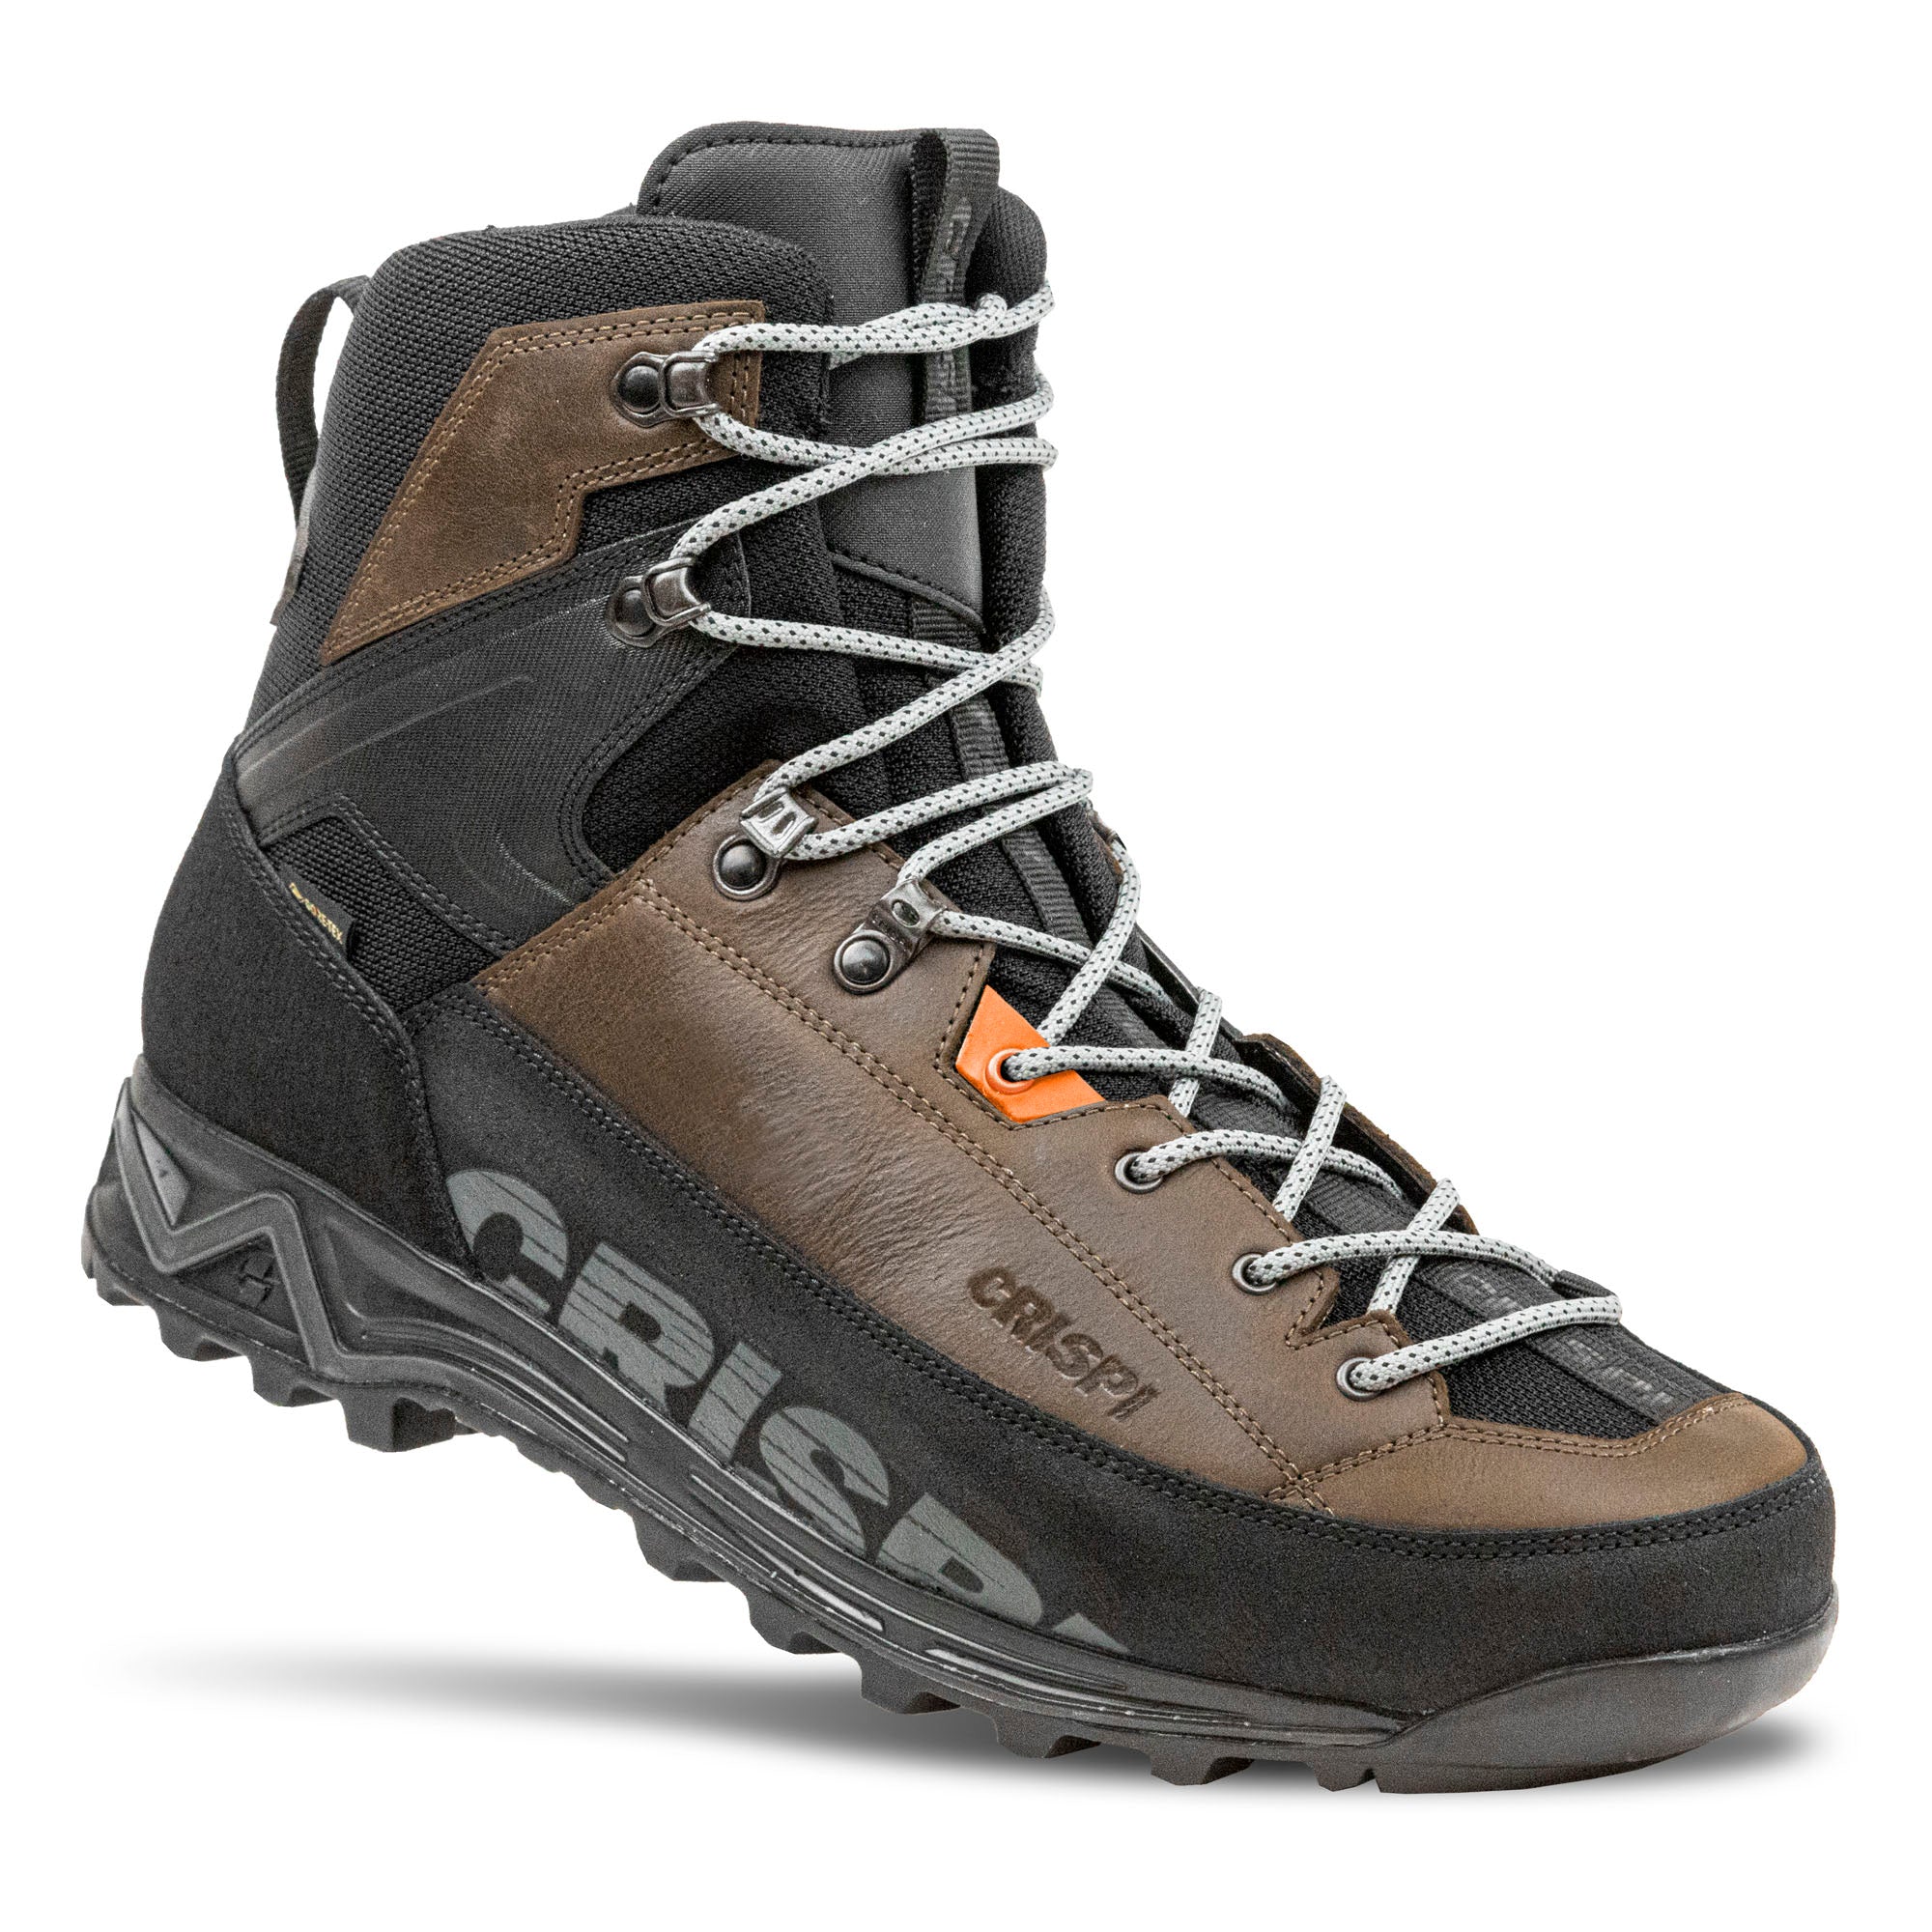 Crispi Altitude GTX Non-Insulated Hunting Boots